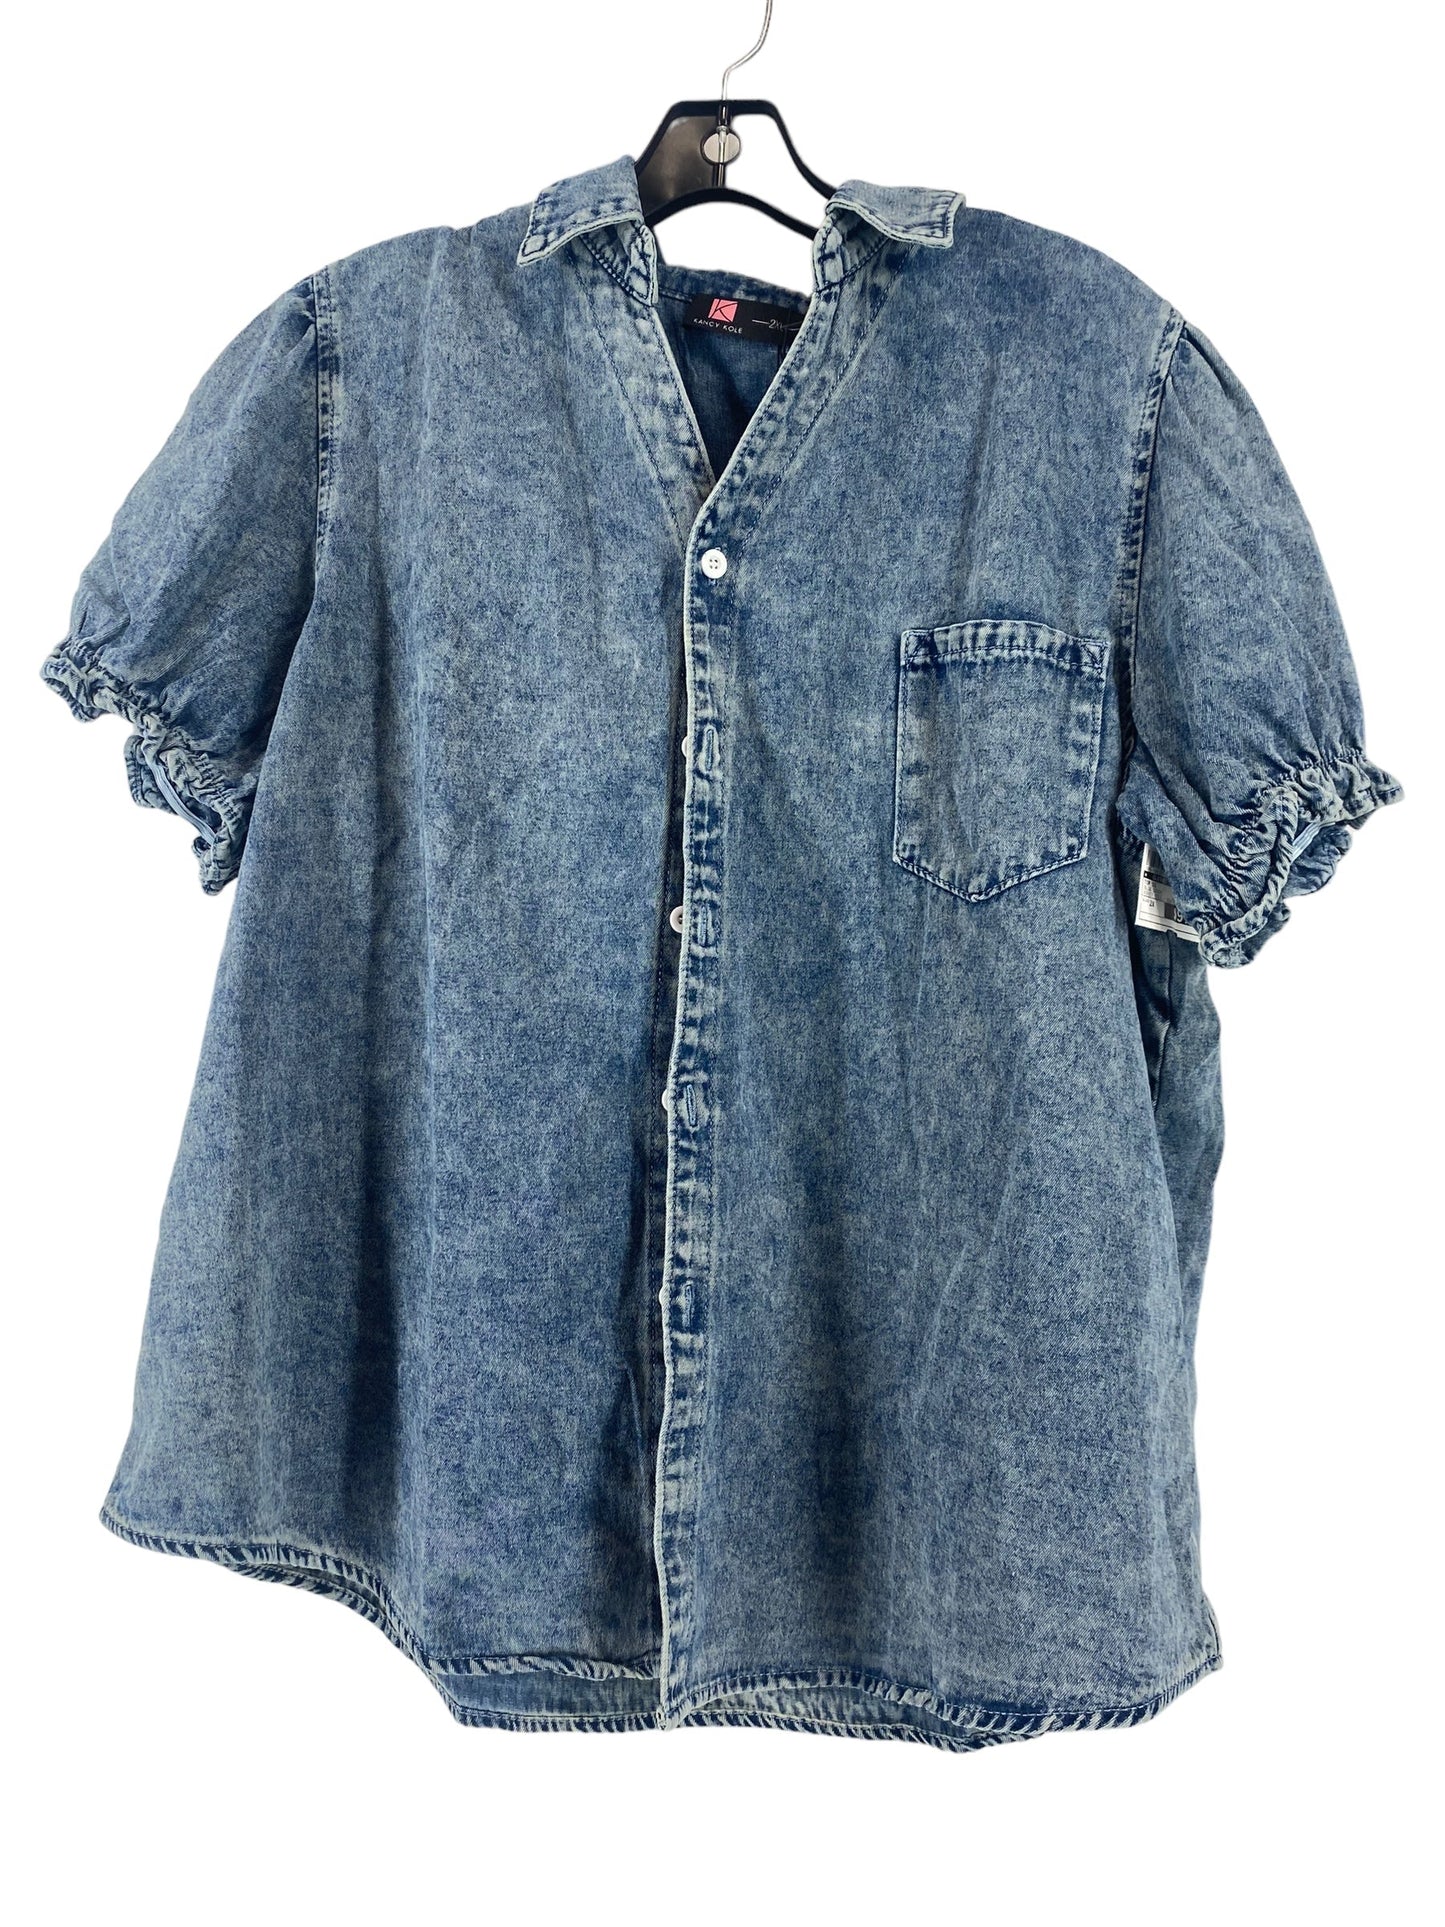 Blue Denim Top Short Sleeve Clothes Mentor, Size 2x